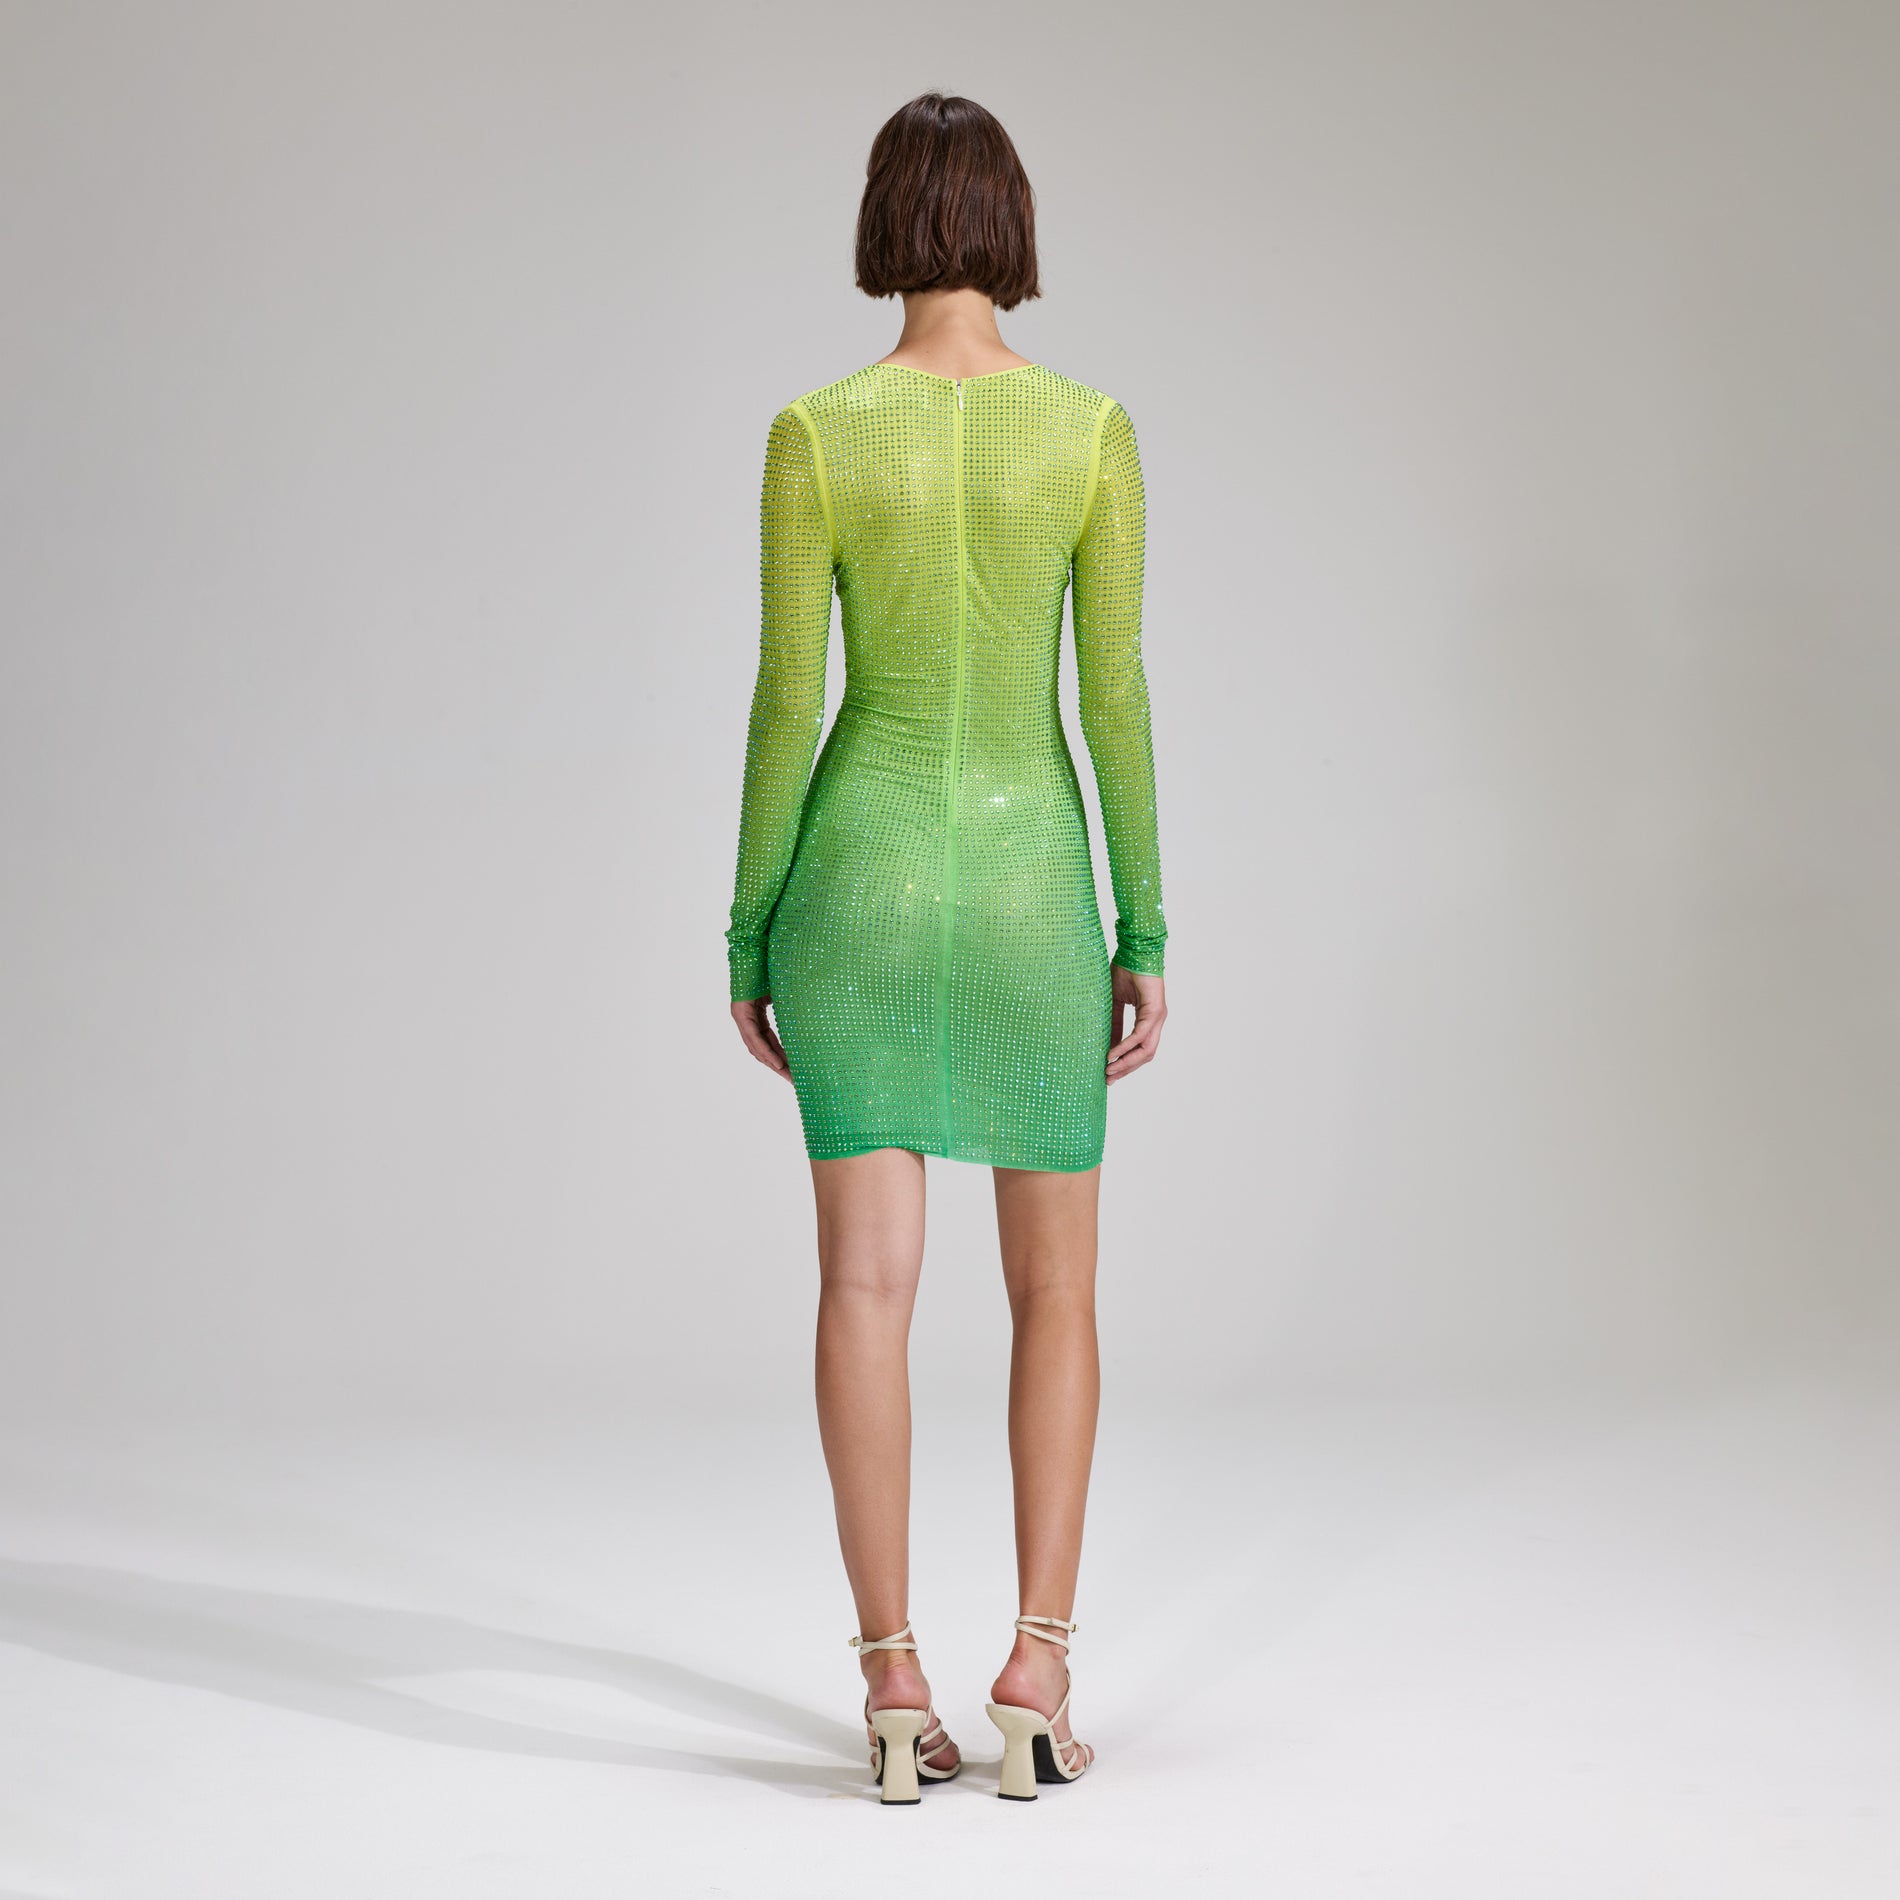 A woman wearing the Green Rhinestone Mesh Keyhole Mini Dress